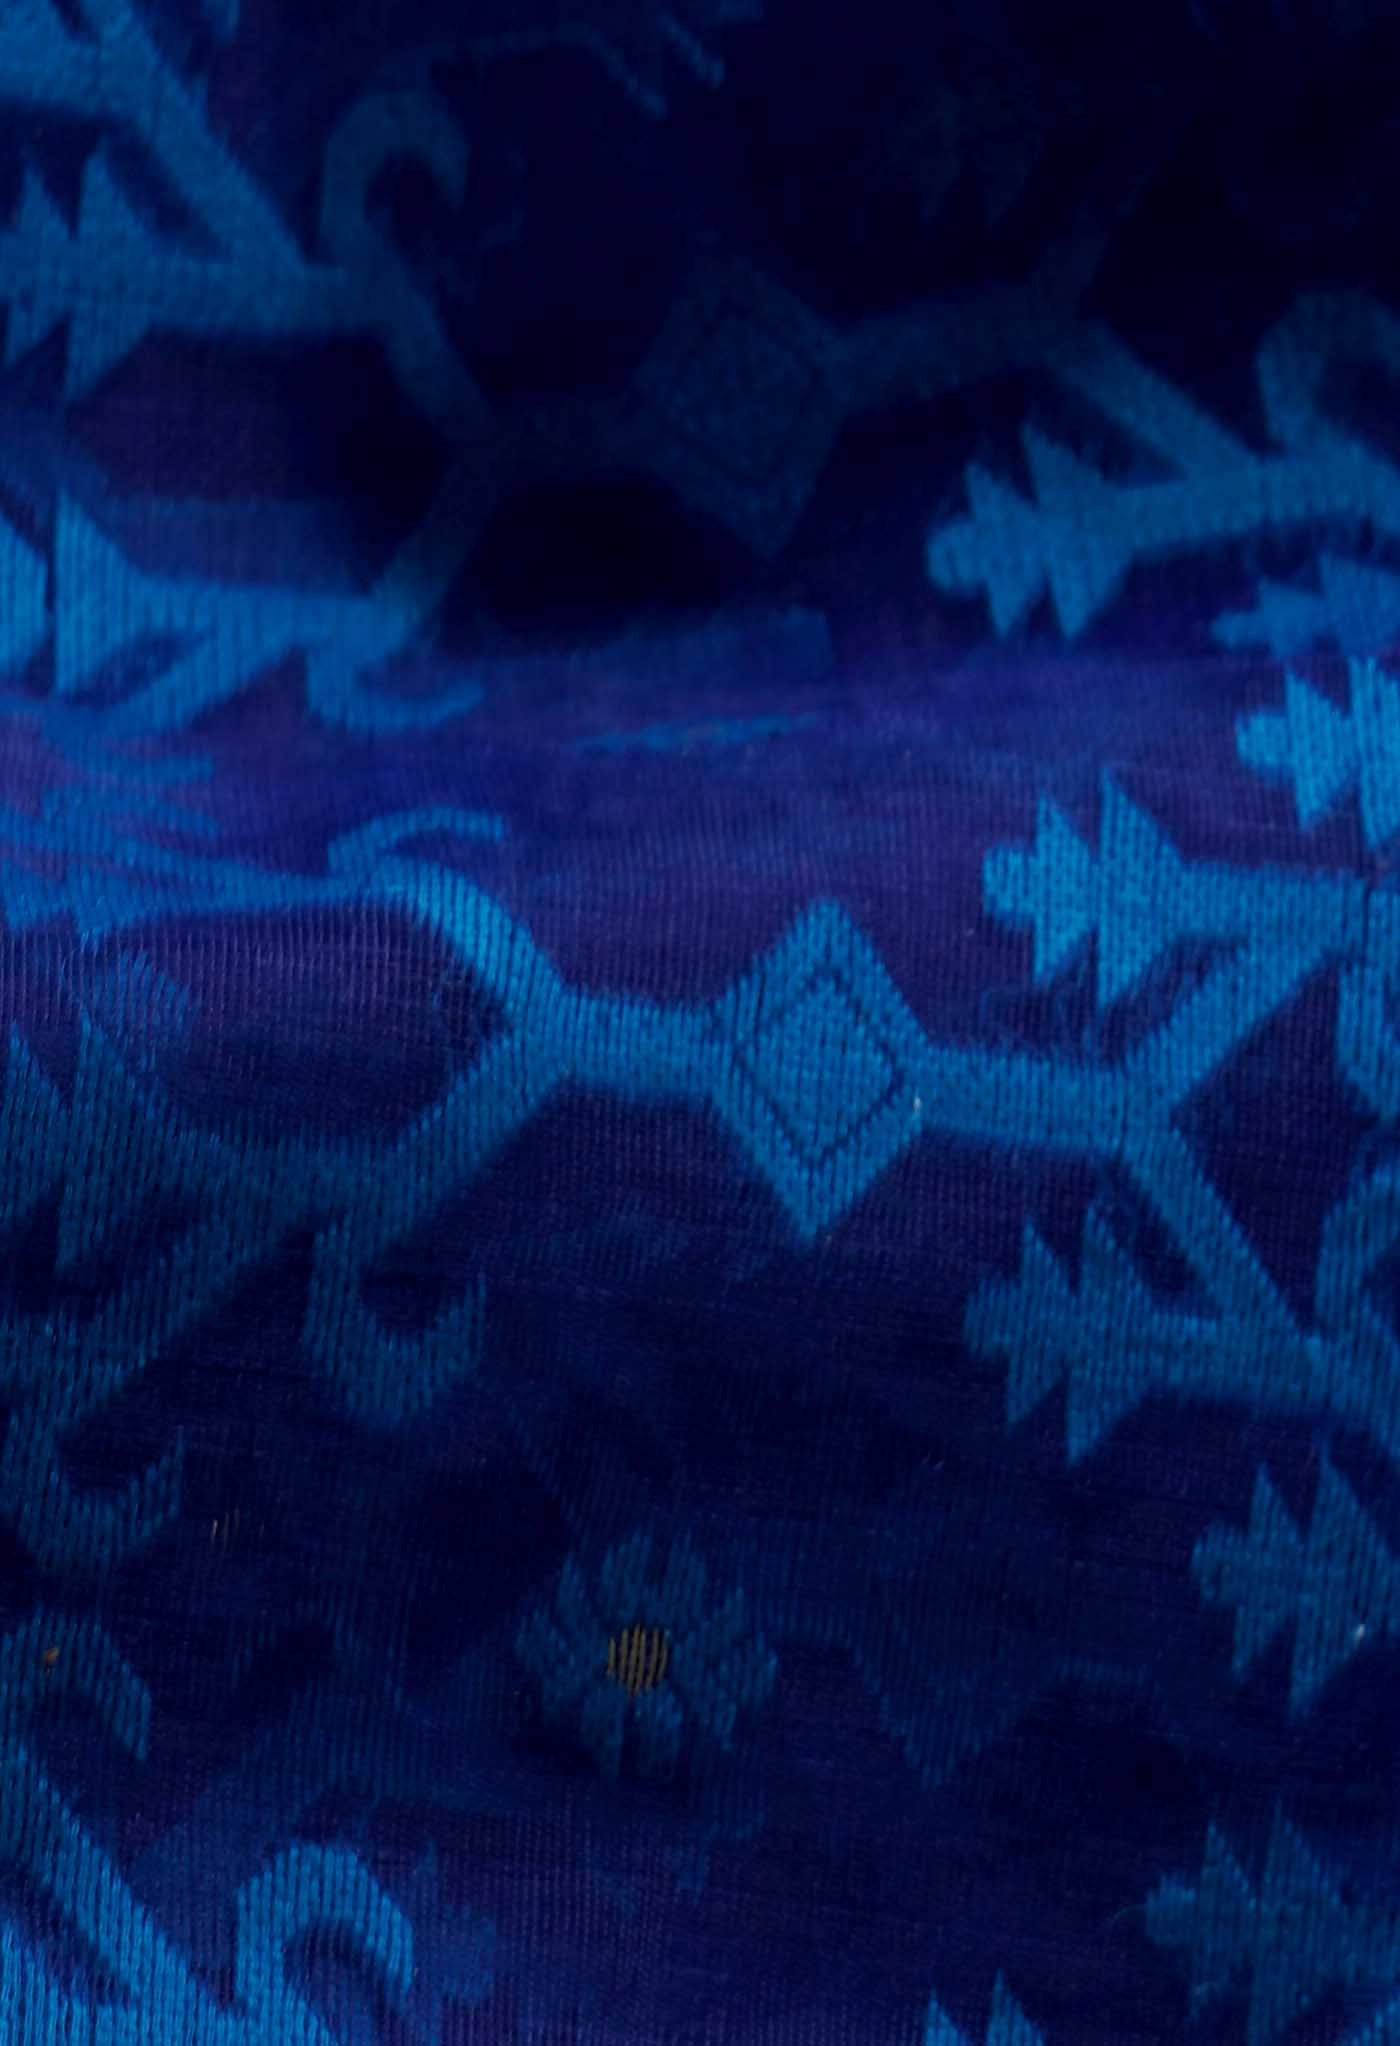 Navy Blue Pure Handloom Dhakai Jamdhani Cotton Saree-UNM65150